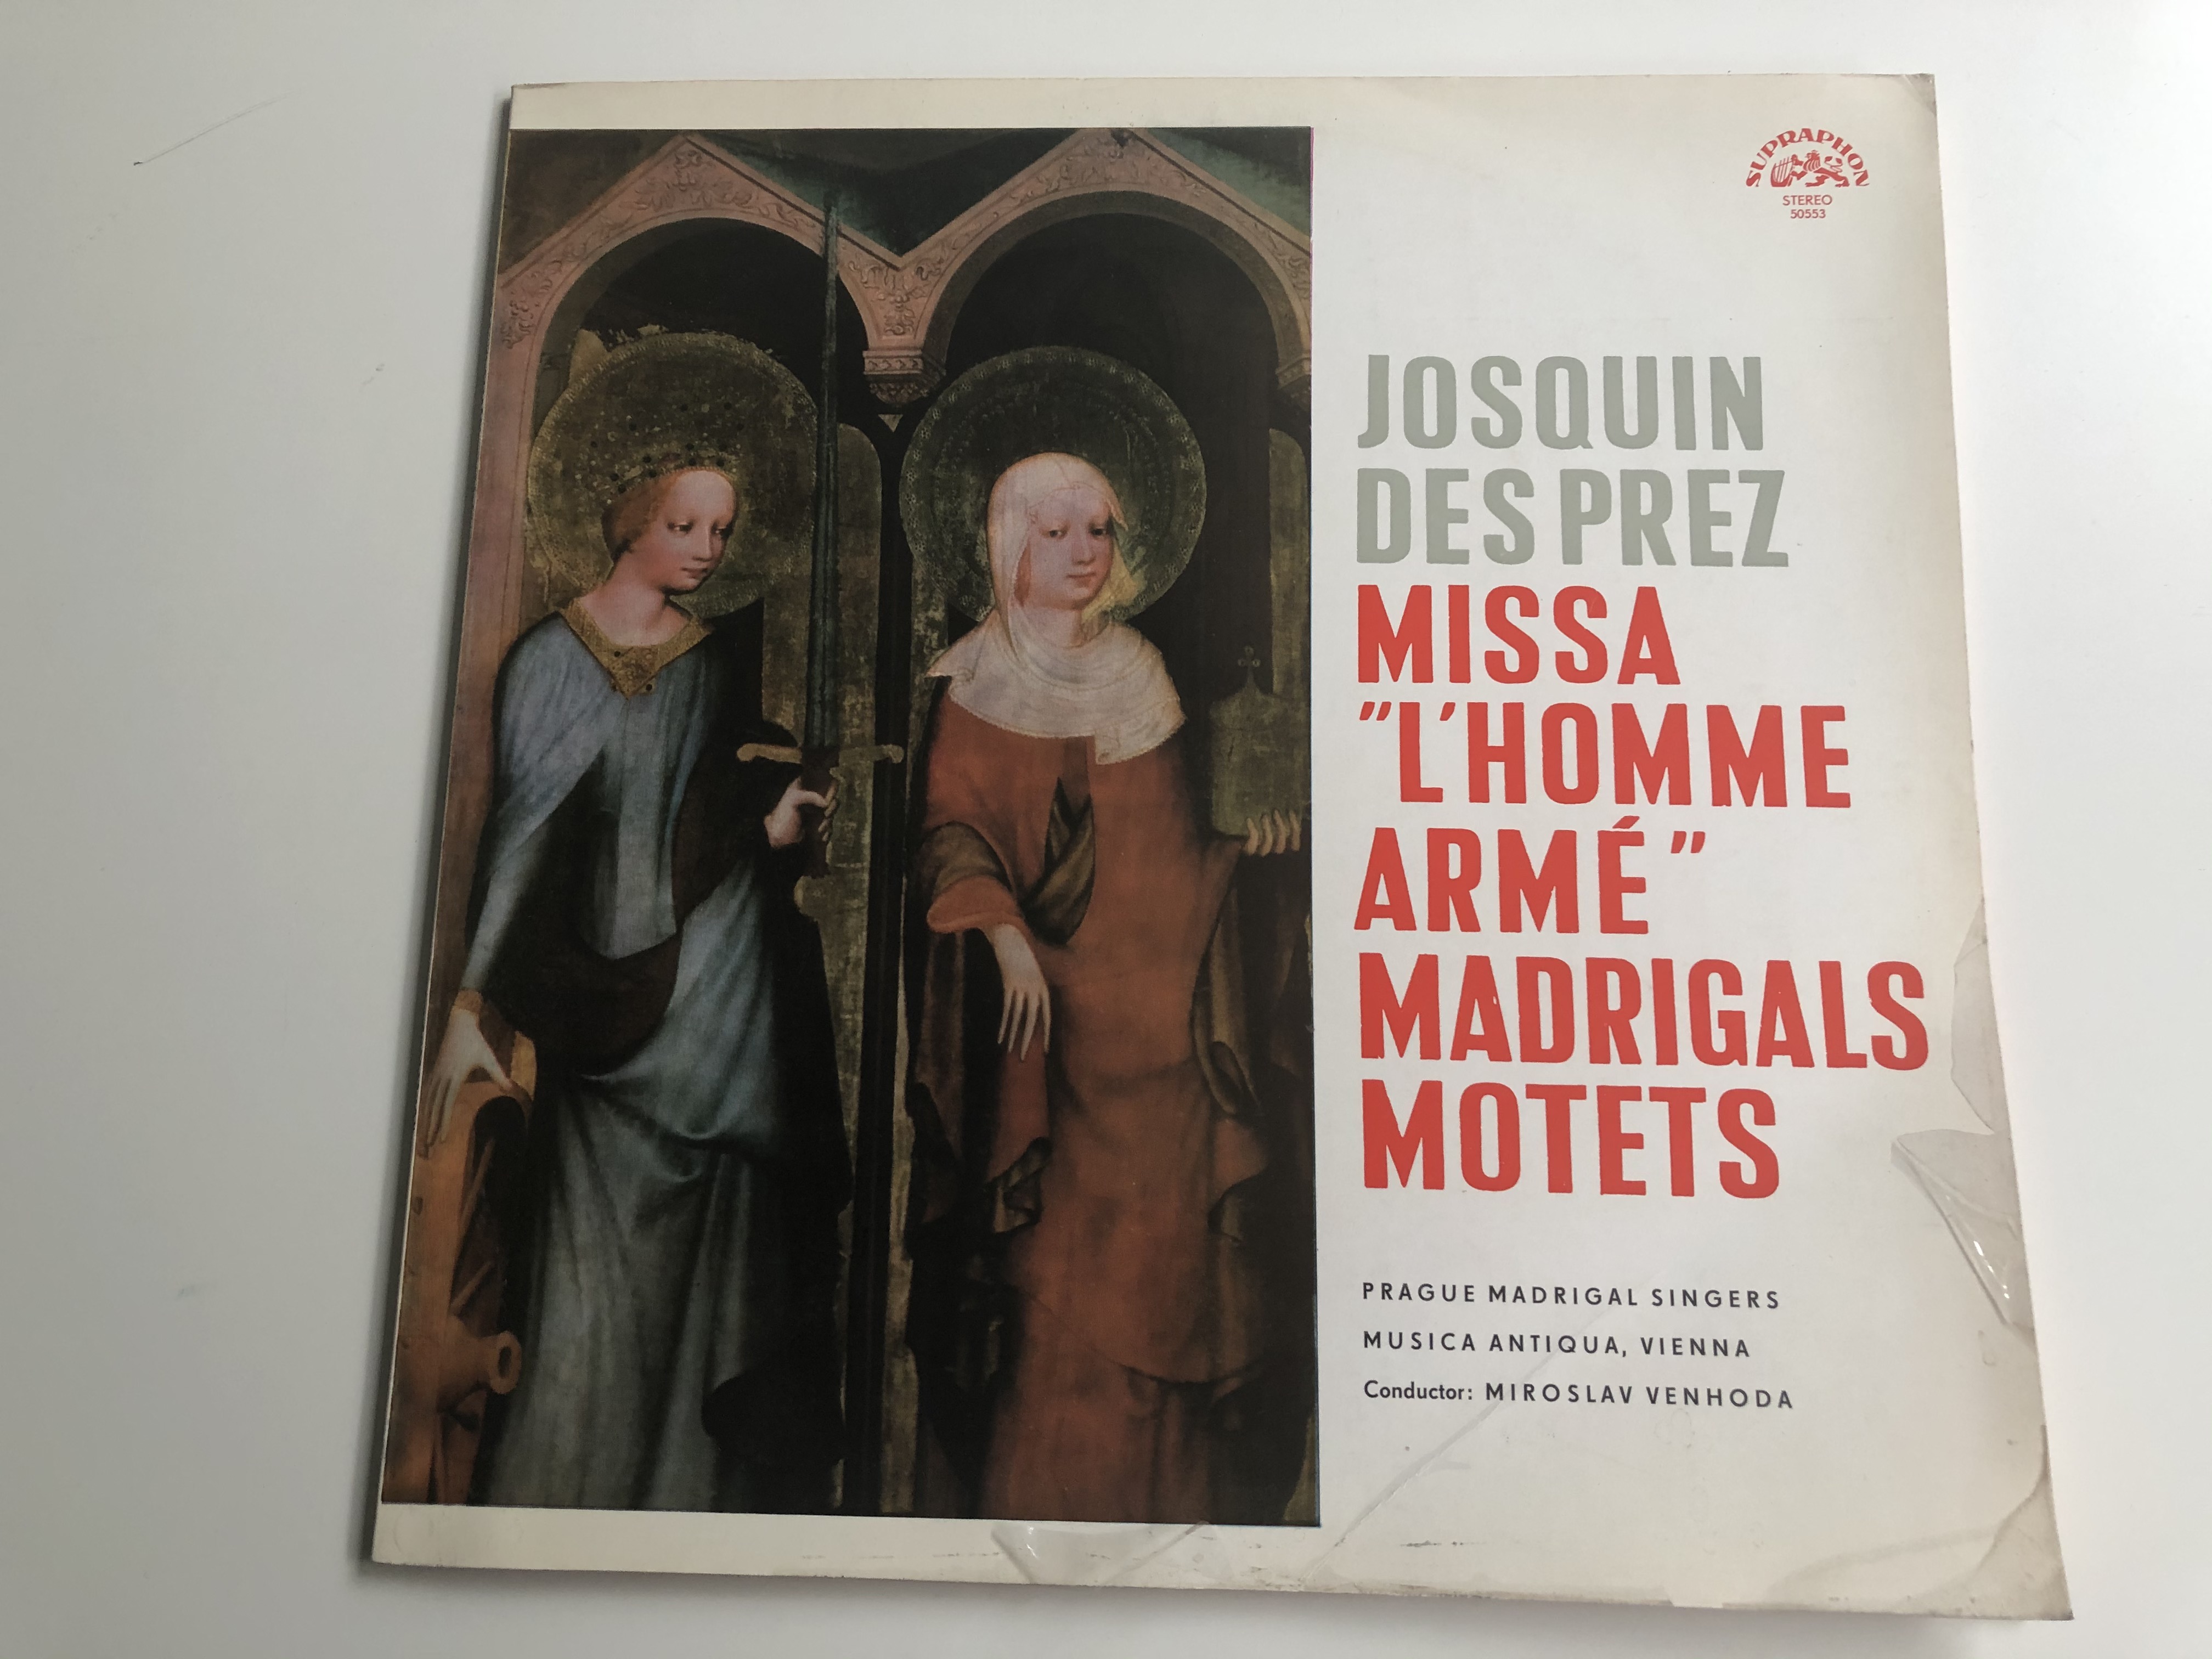 josquin-des-prez-missa-l-homme-arm-madrigals-motets-prague-madrigal-singers-musica-antiqua-vienna-conducted-by-miroslav-venhoda-supraphon-lp-stereo-50553-1-.jpg